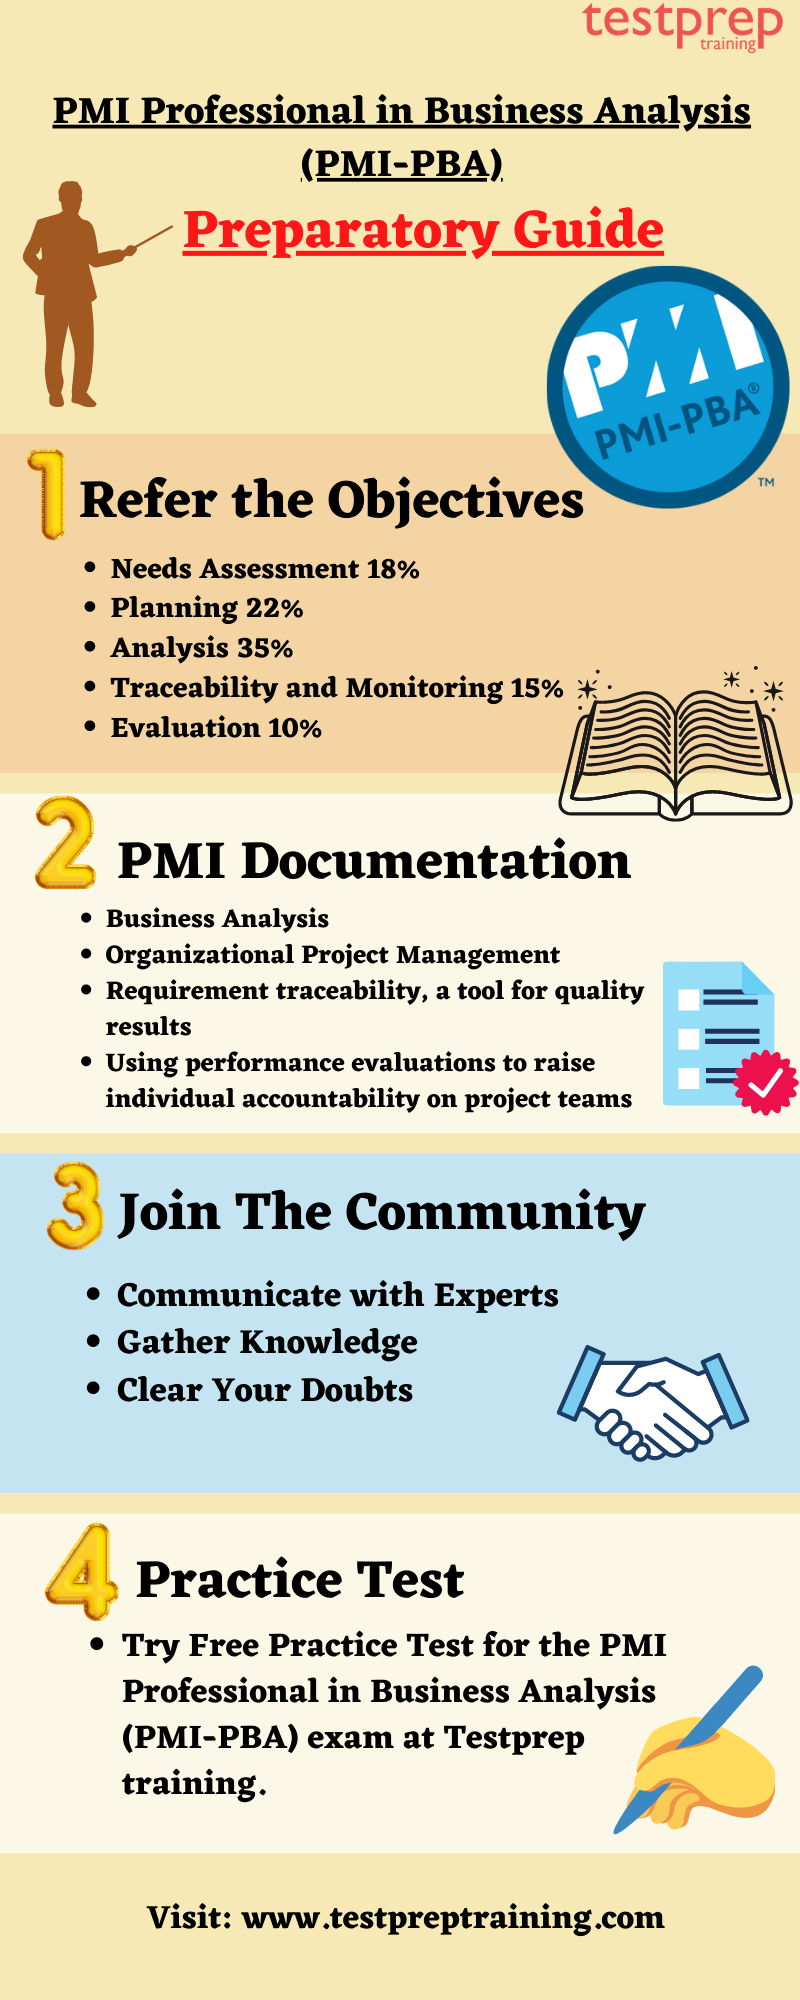 PMI Professional in Business Analysis (PMI-PBA) preparatory guide 